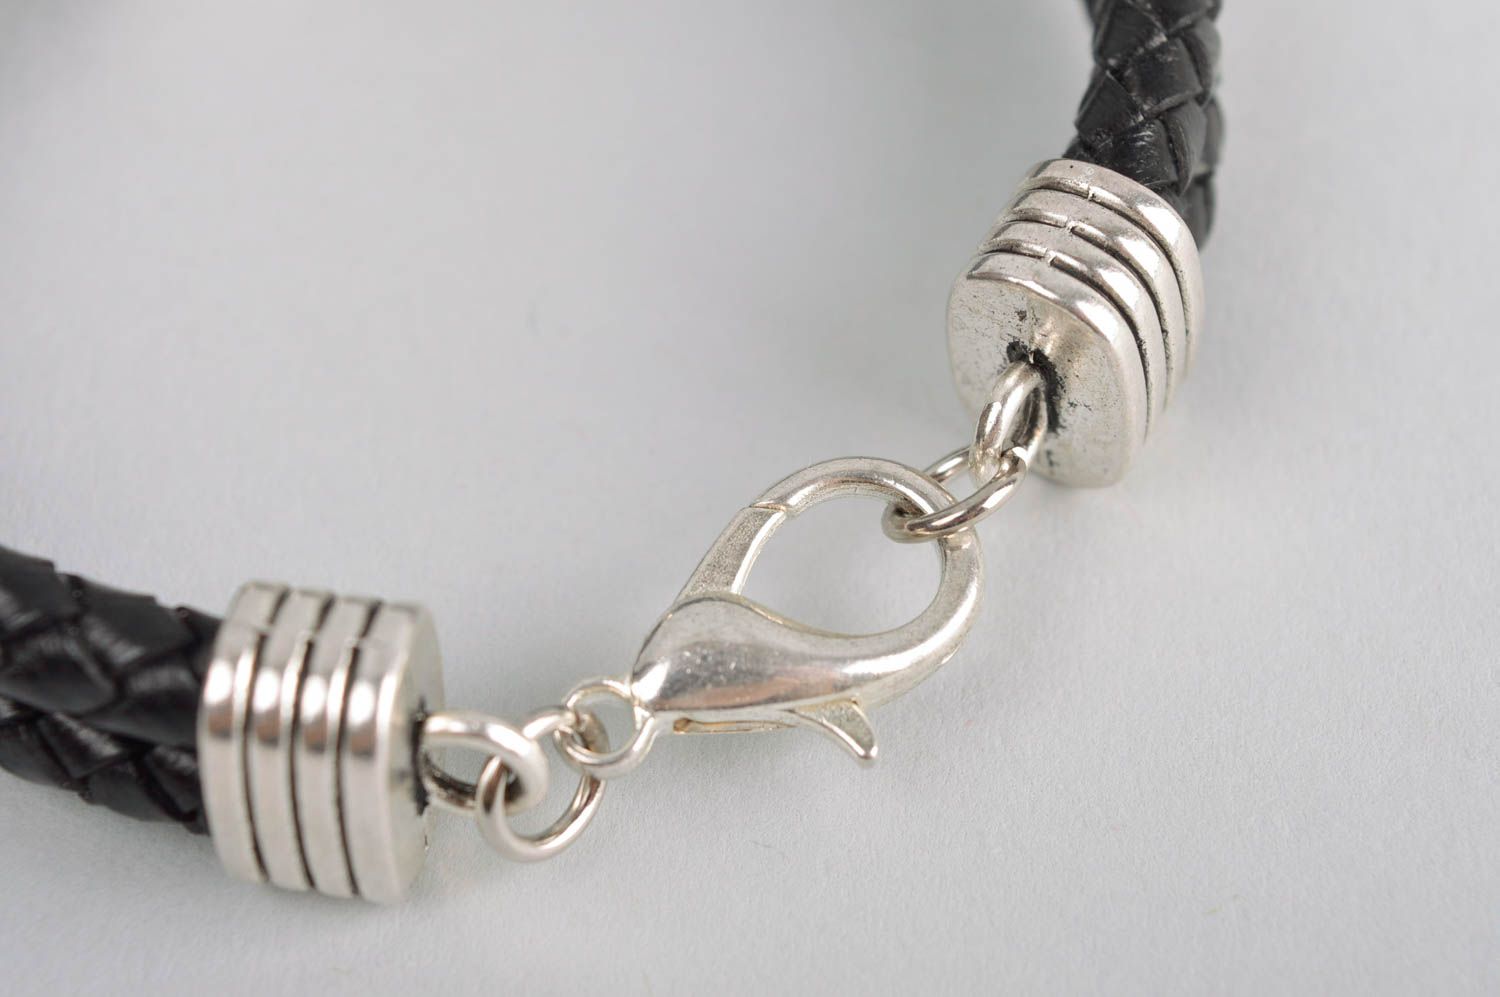 Handmade bracelet for women leather bracelet gift ideas unusual accessory photo 4